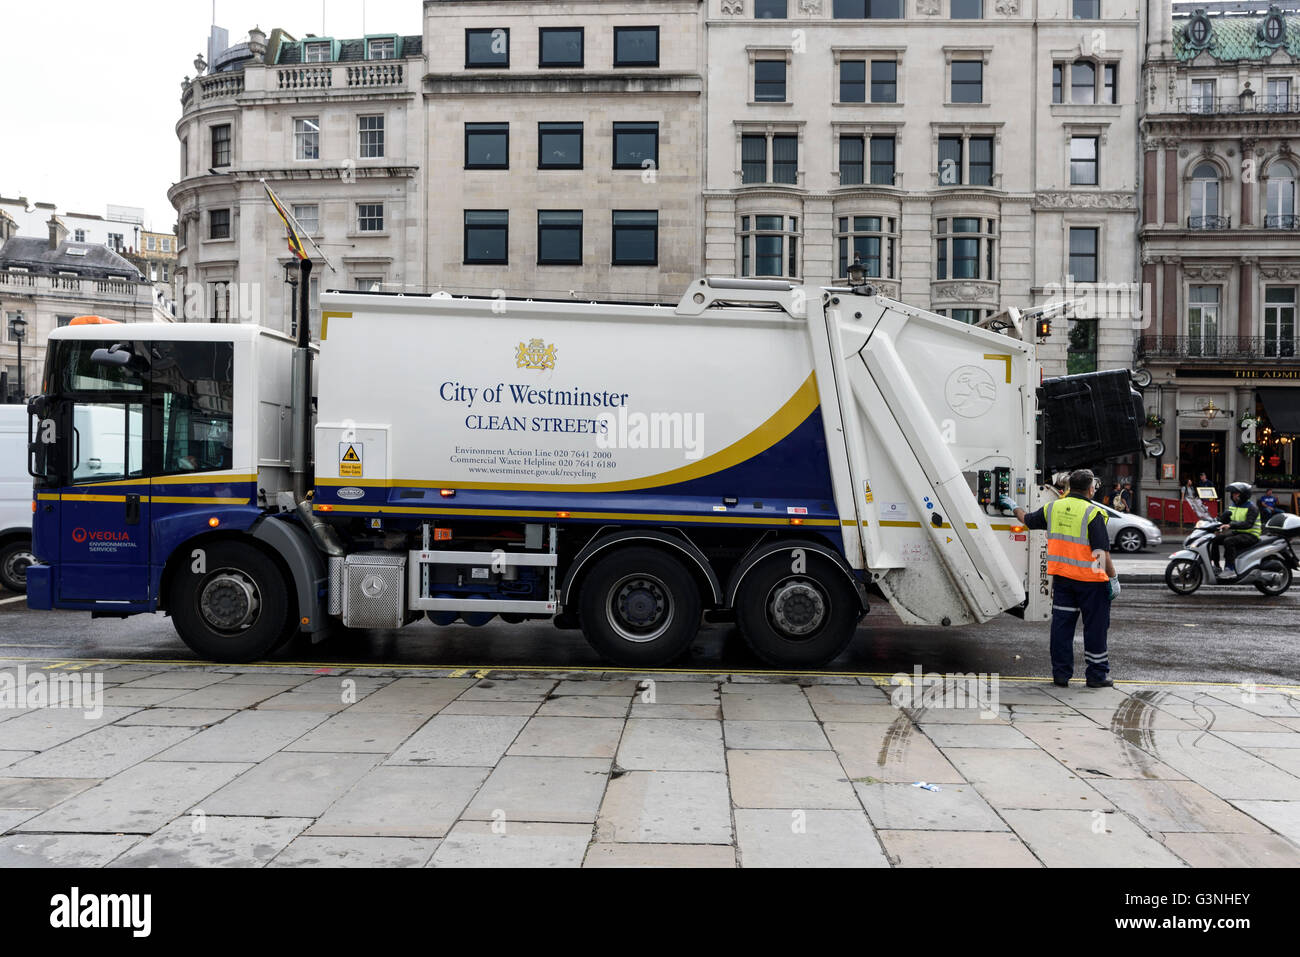 City of Westminster rubbish truck, UK. Stock Photo